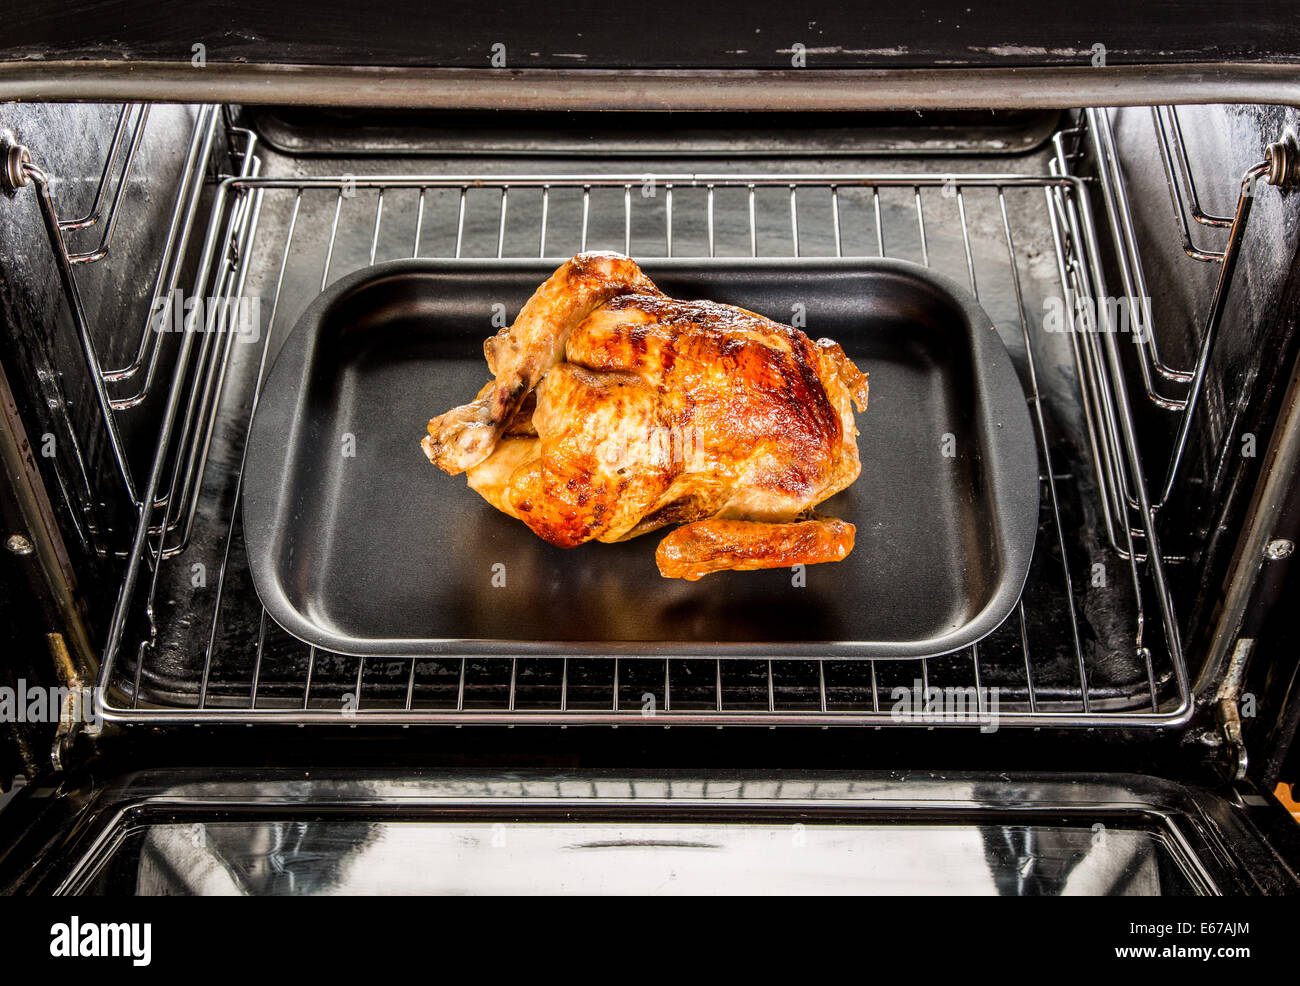 https://c8.alamy.com/comp/E67AJM/roast-chicken-in-the-oven-cooking-in-the-oven-E67AJM.jpg